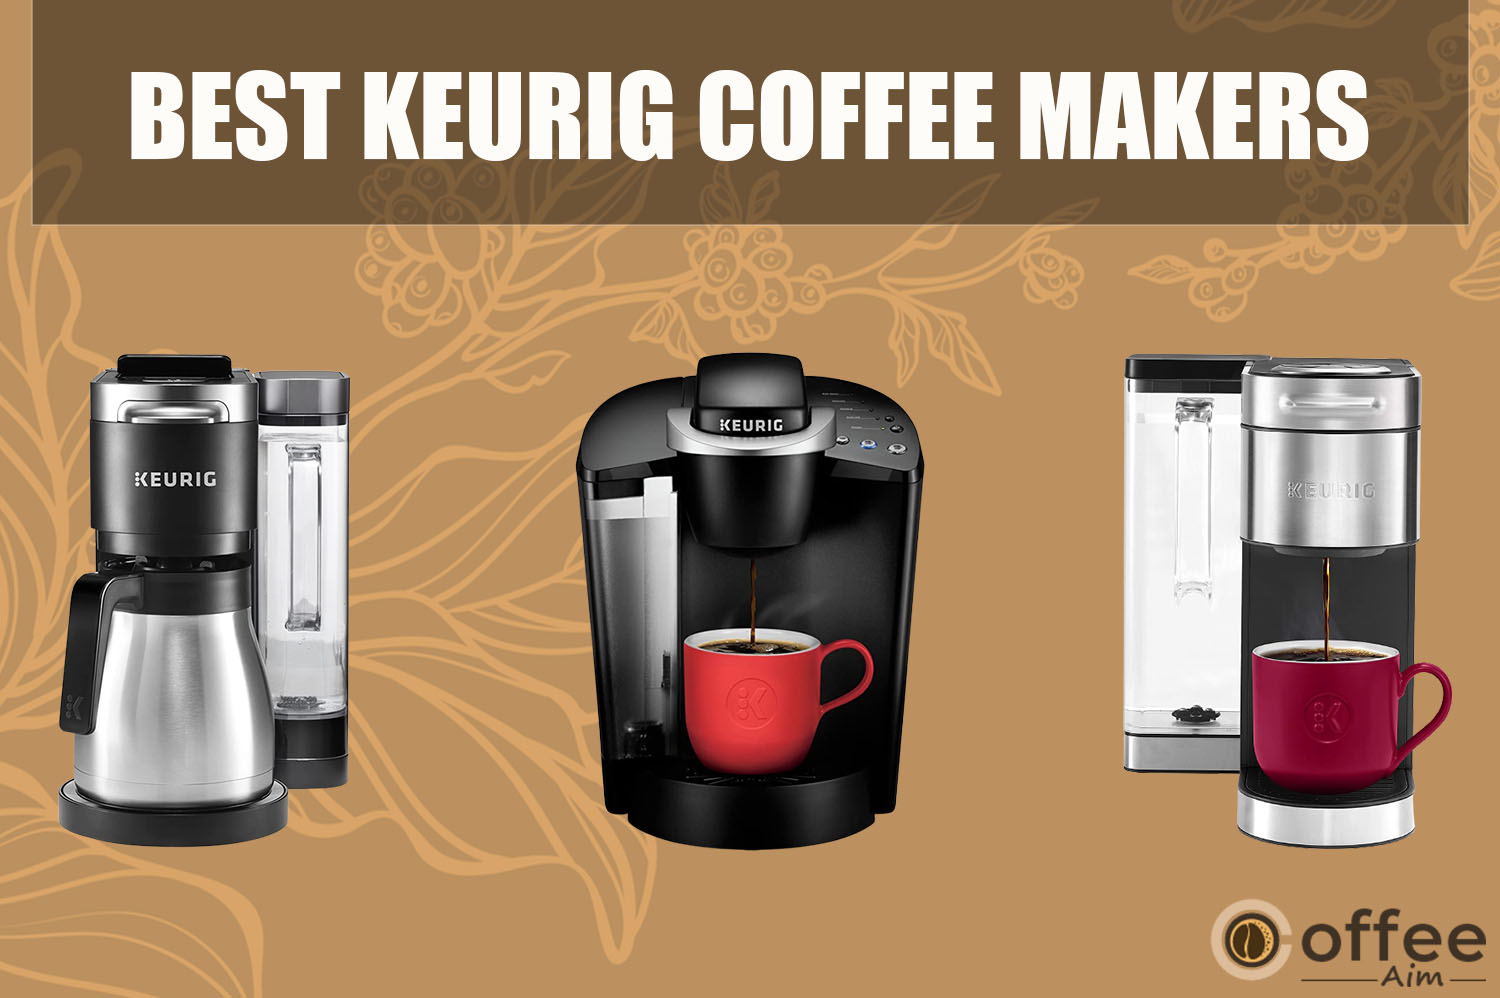 10-Best-Keurig-Coffee-Makers, they are the best of the Keurig